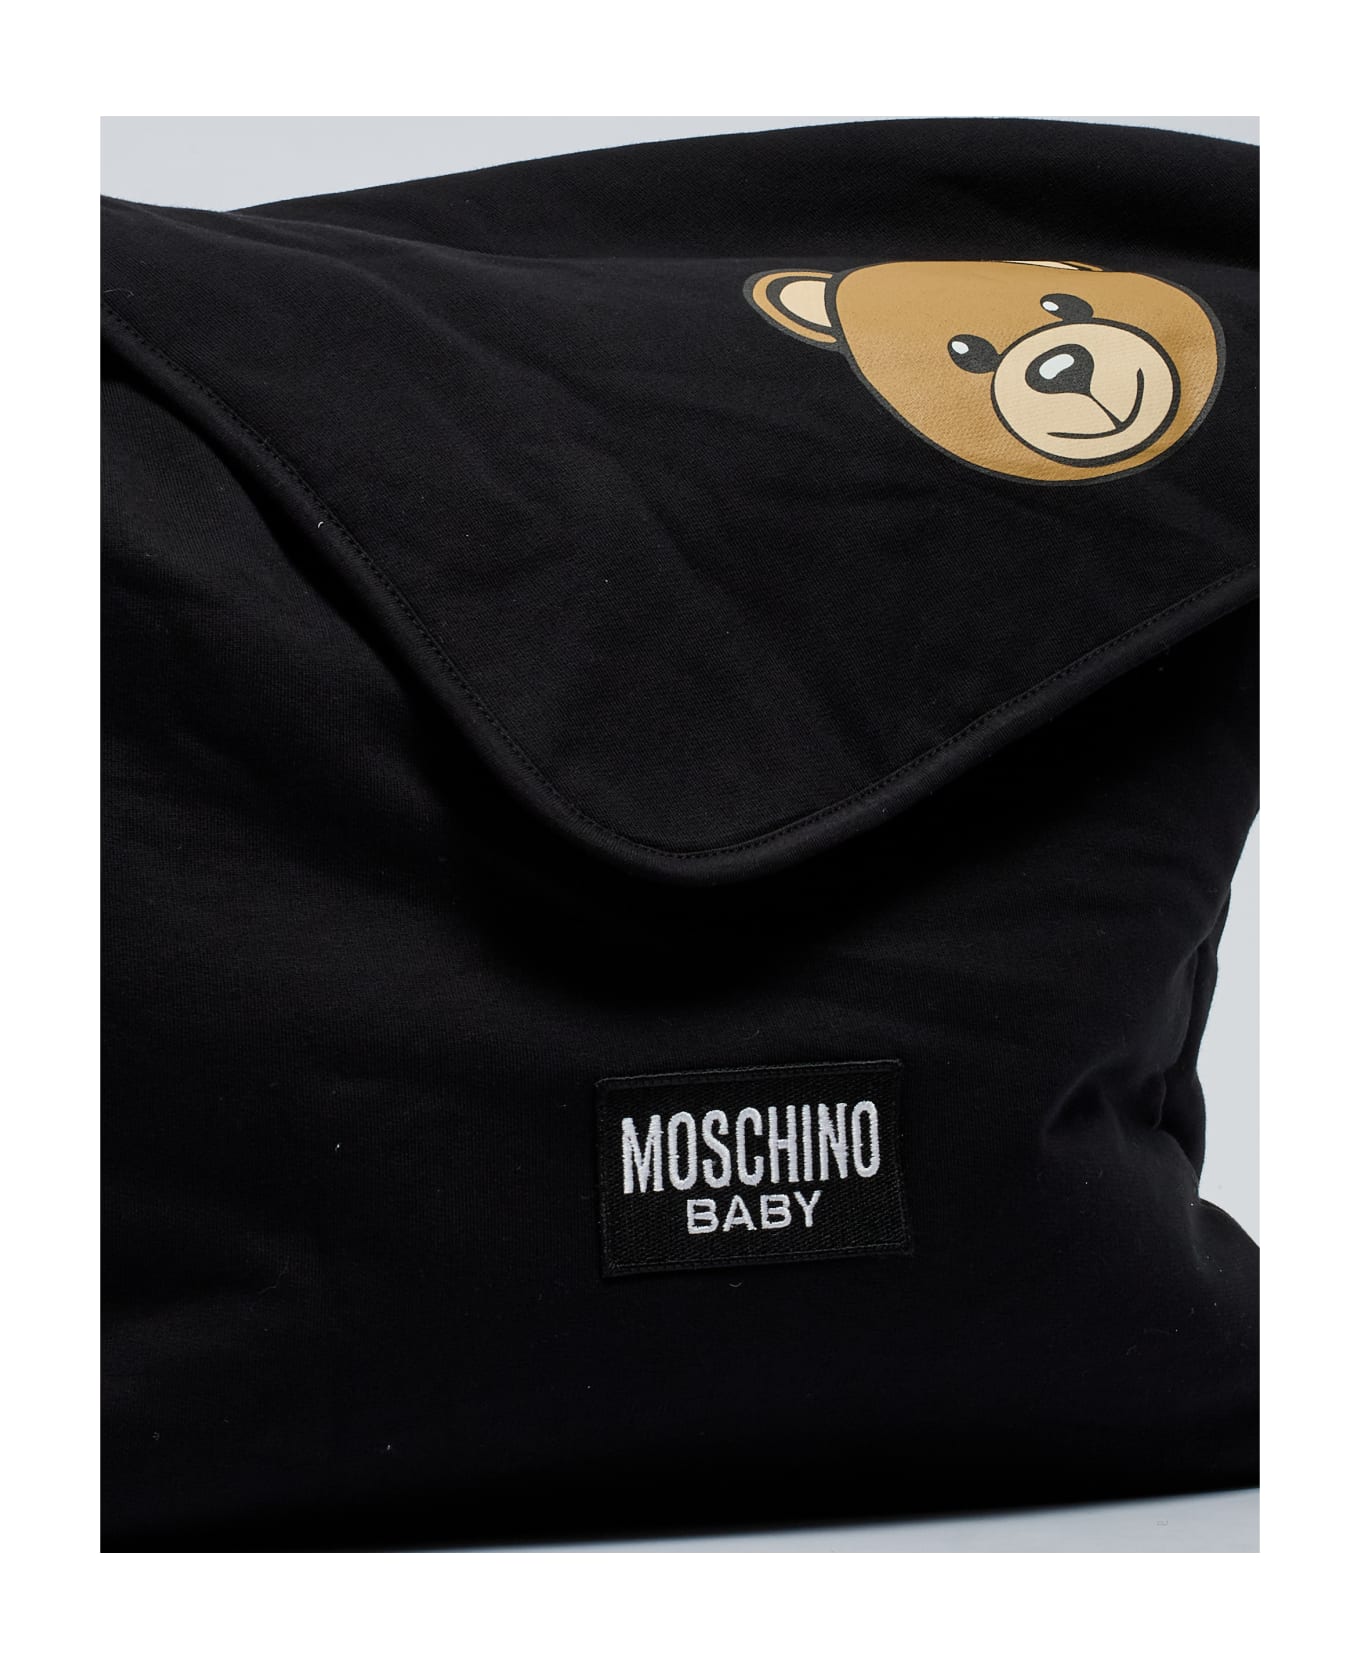 Moschino Changing gavriel Bag Tote - NERO